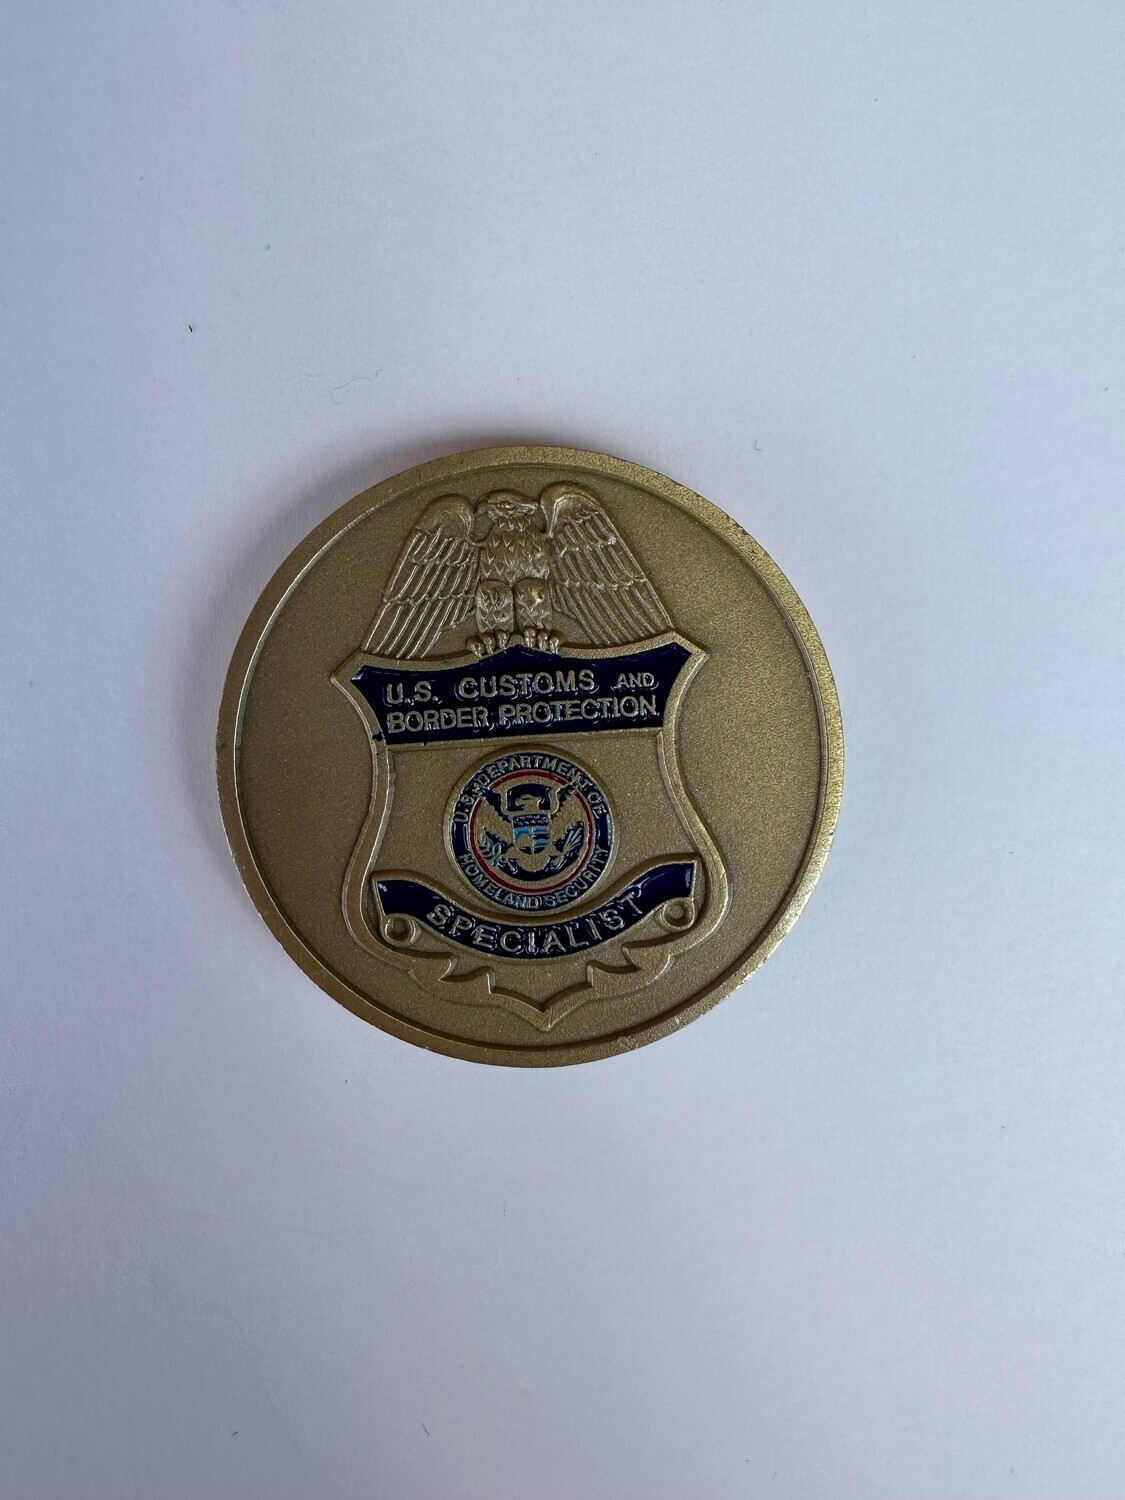 CBP SPECIALIST COIN